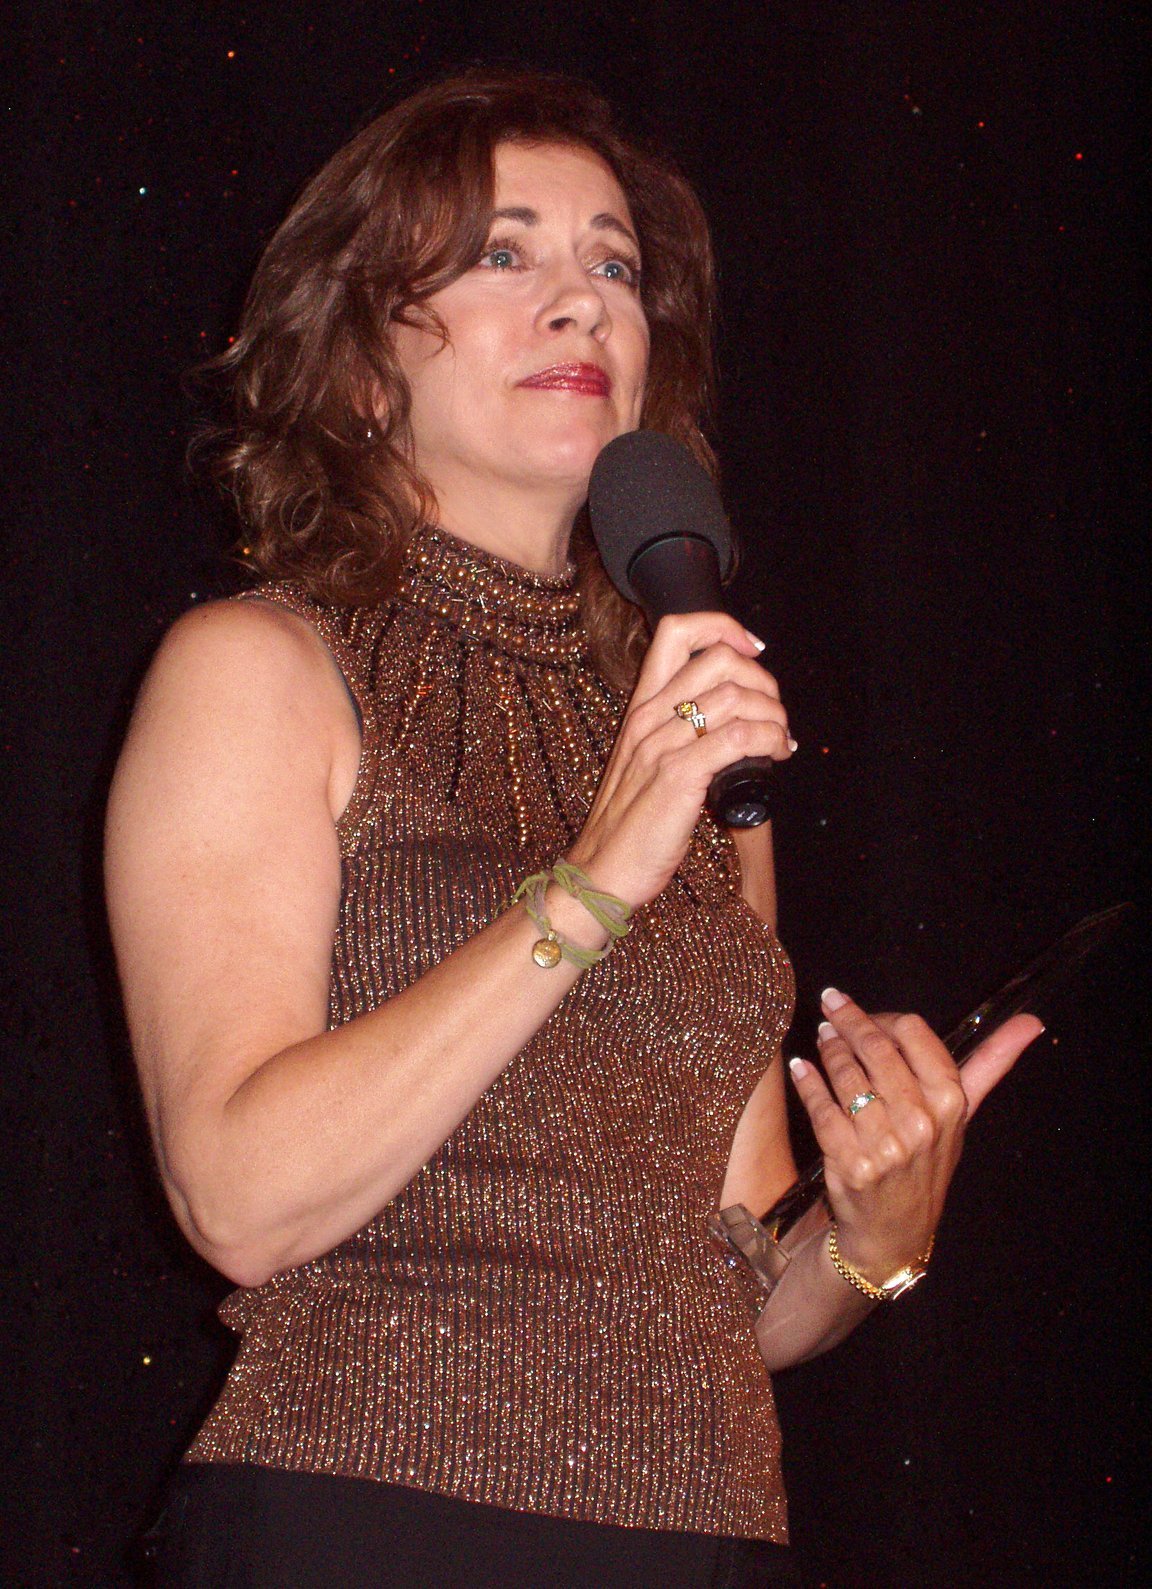 Filmmaker Kathi Carey receives honors at the La Femme Int'l Film Festival 2008 Awards Ceremony for her film 